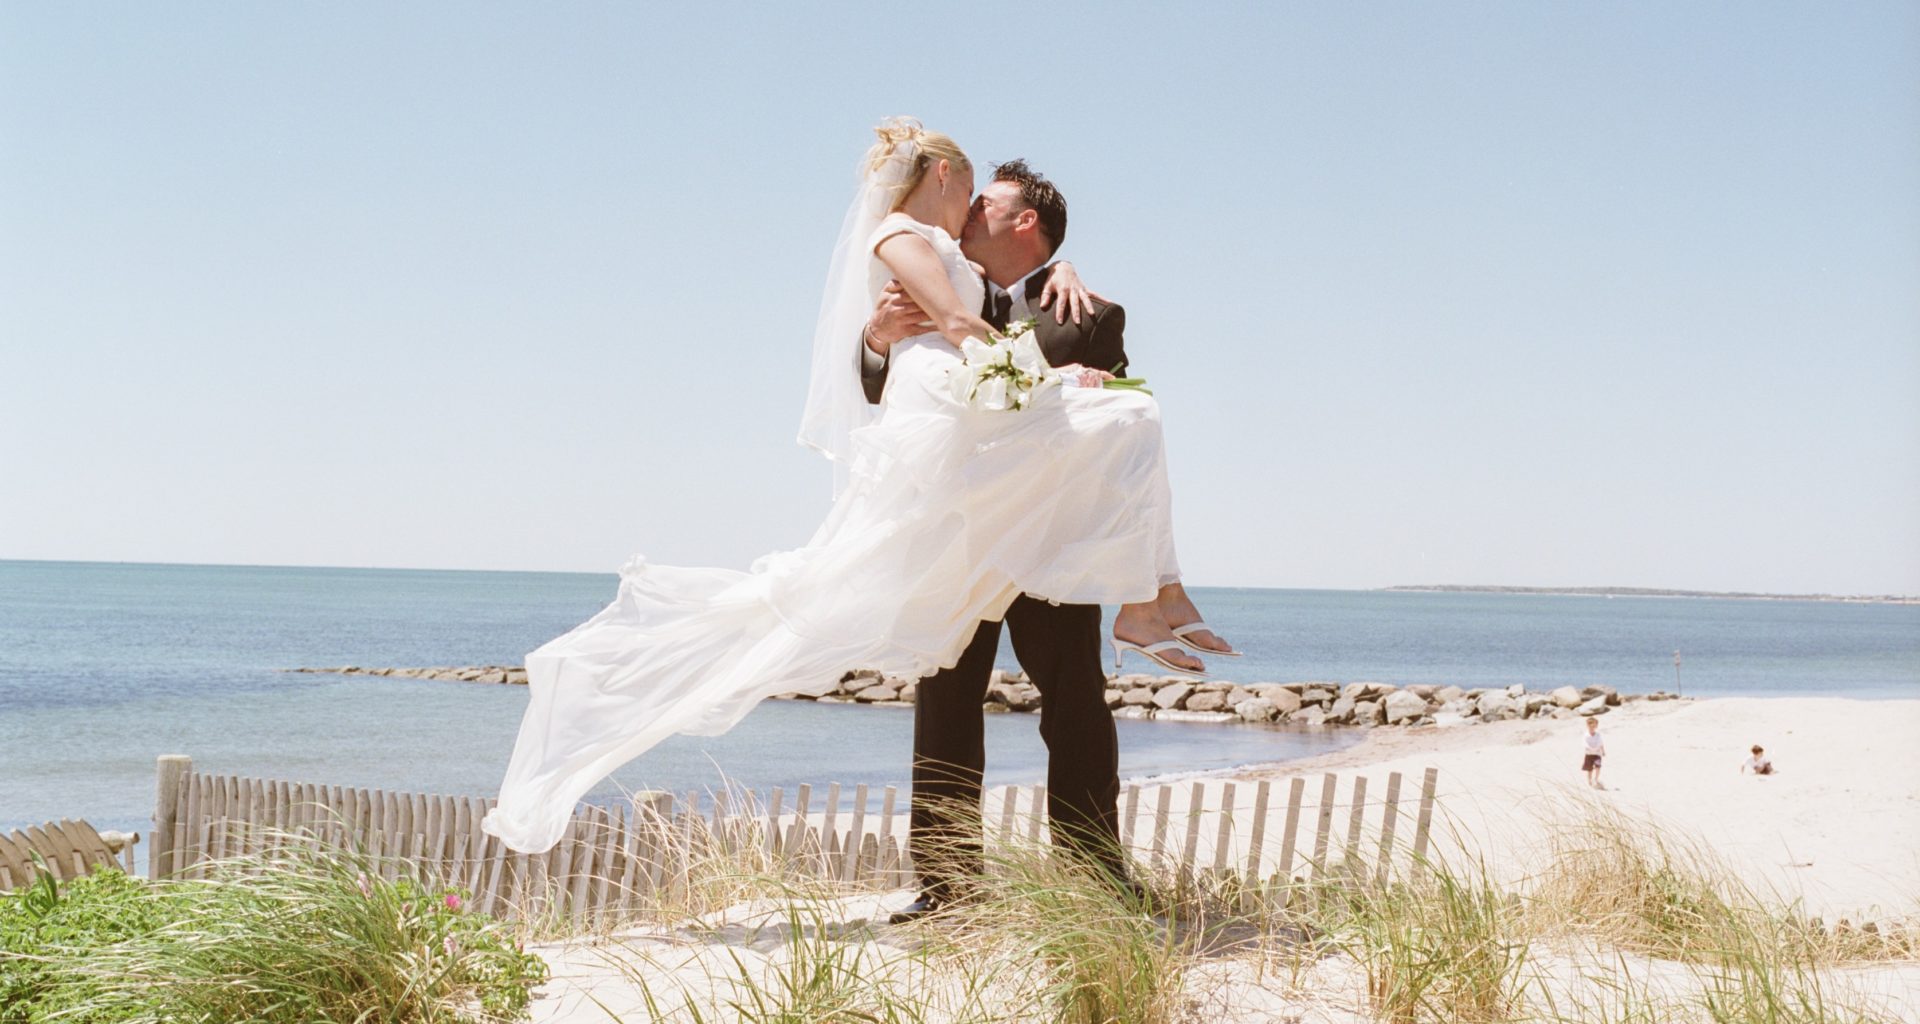 Summer newlyweds on Cape Cod beach